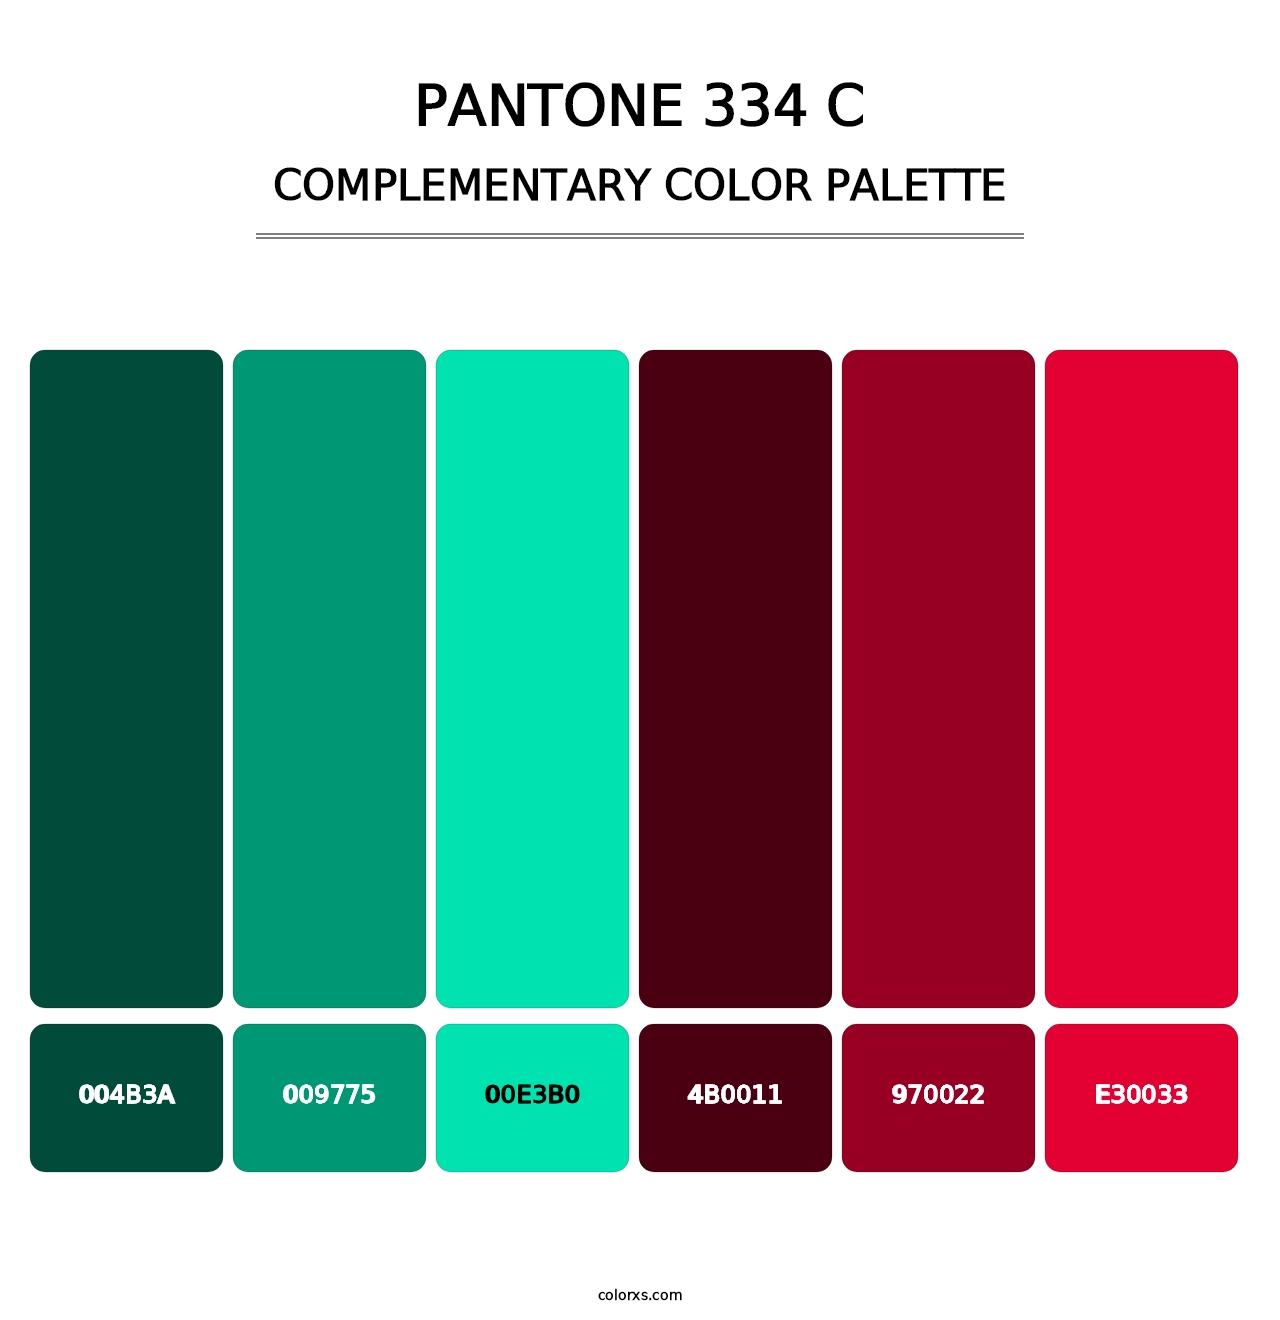 PANTONE 334 C - Complementary Color Palette